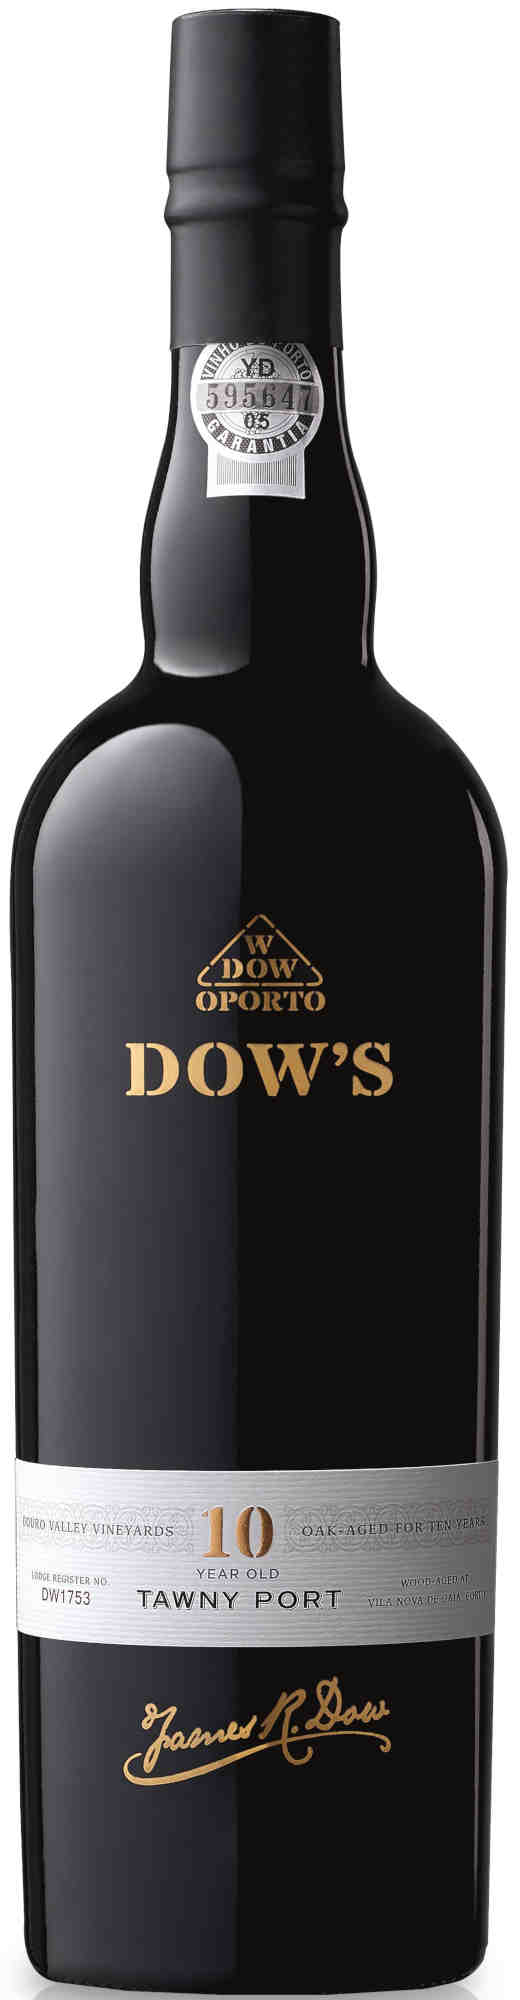 Dows-10-Years-Tawny-Port